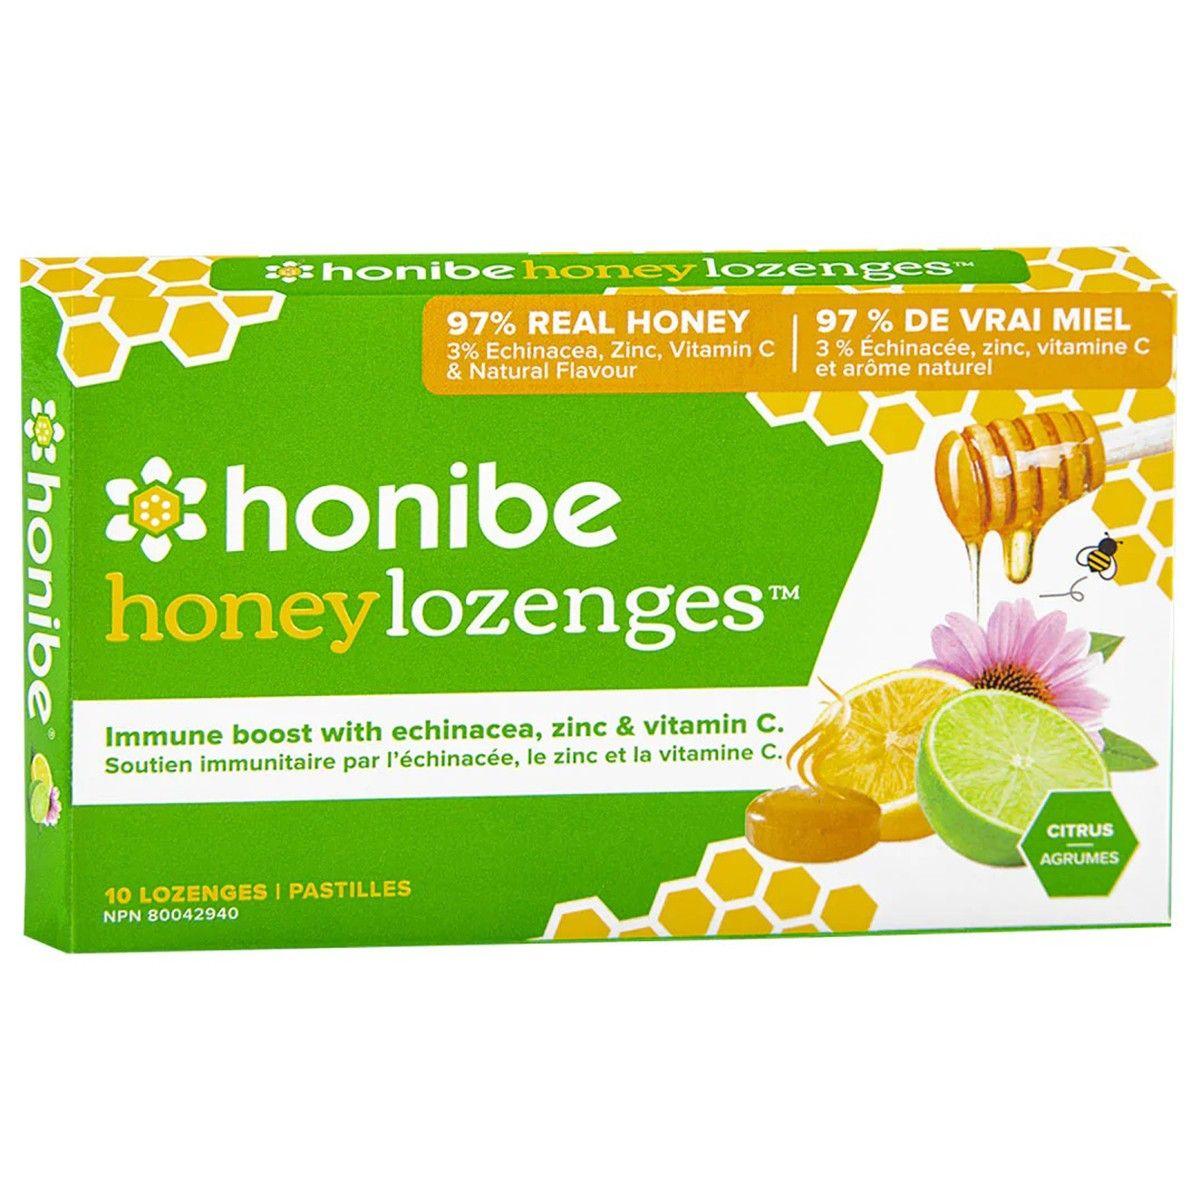 Honibe-Honey Lozenges Citrus 10 Lozenges Cough, Cold & Flu at Village Vitamin Store